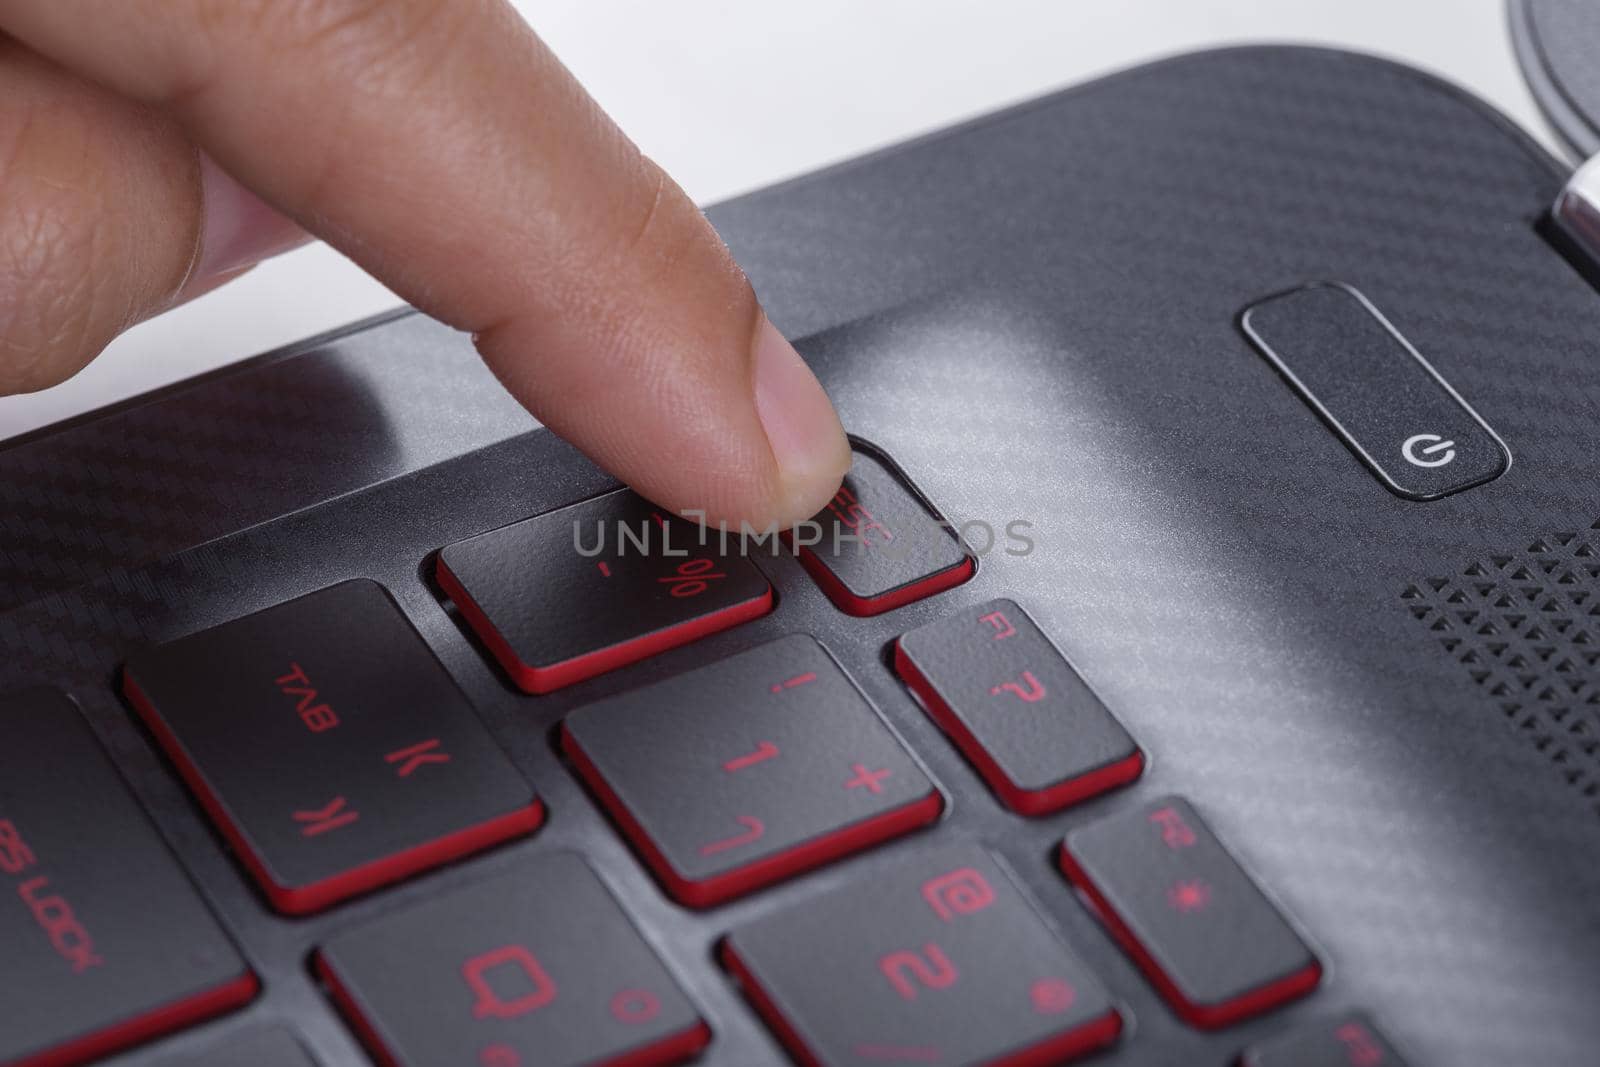 finger pushing esc button on a laptop keyboard